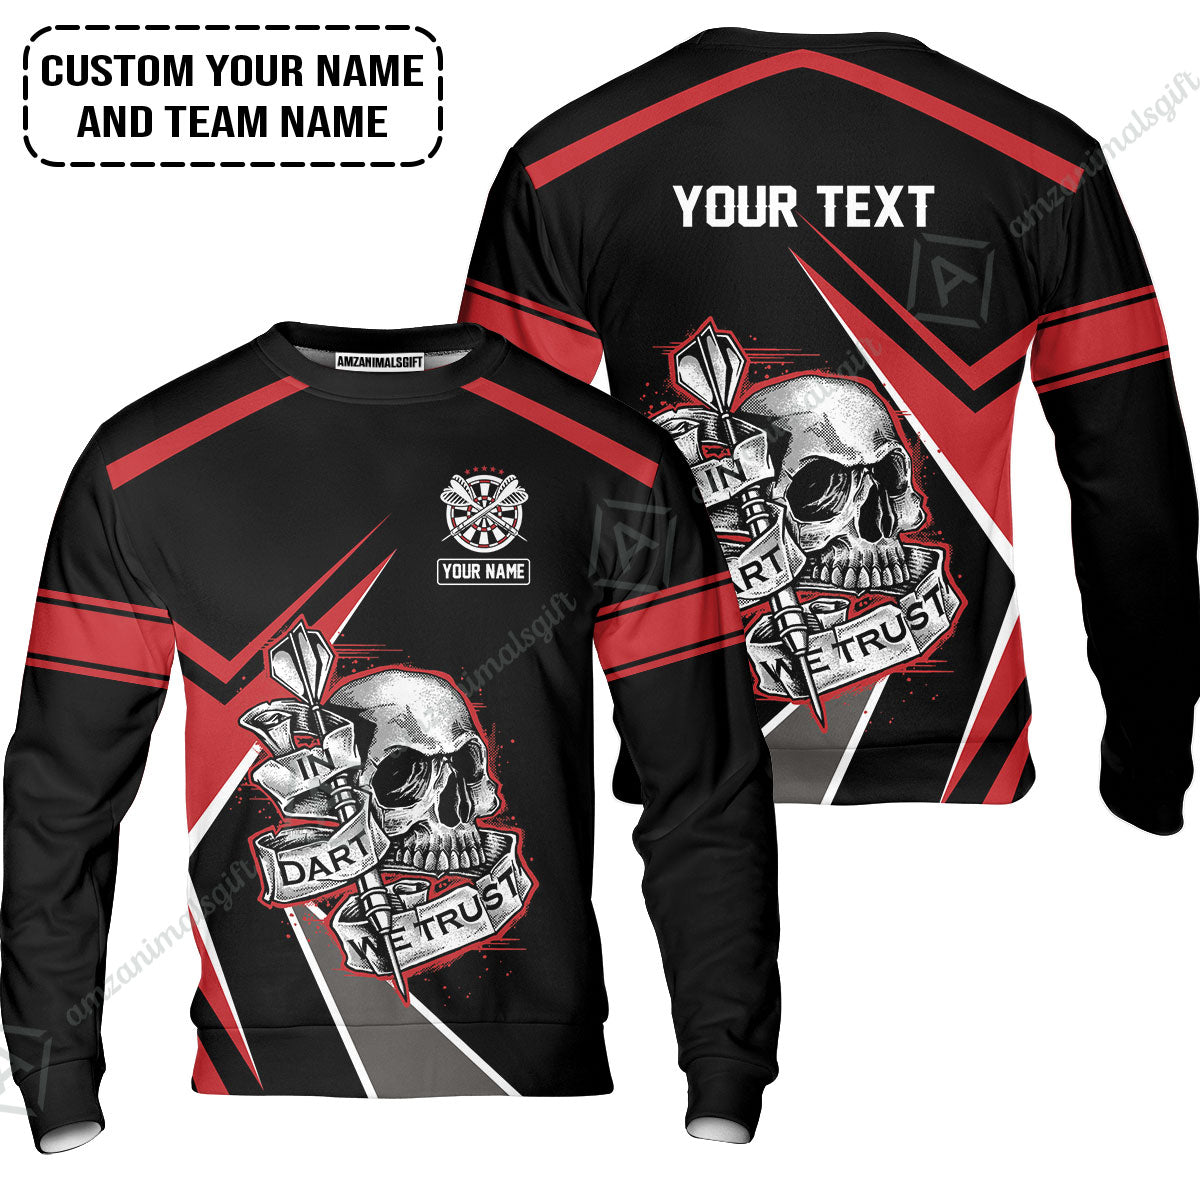 Customized Name & Text Darts Sweatshirt, Skull In Darts We Trust Personalized Darts Sweatshirt